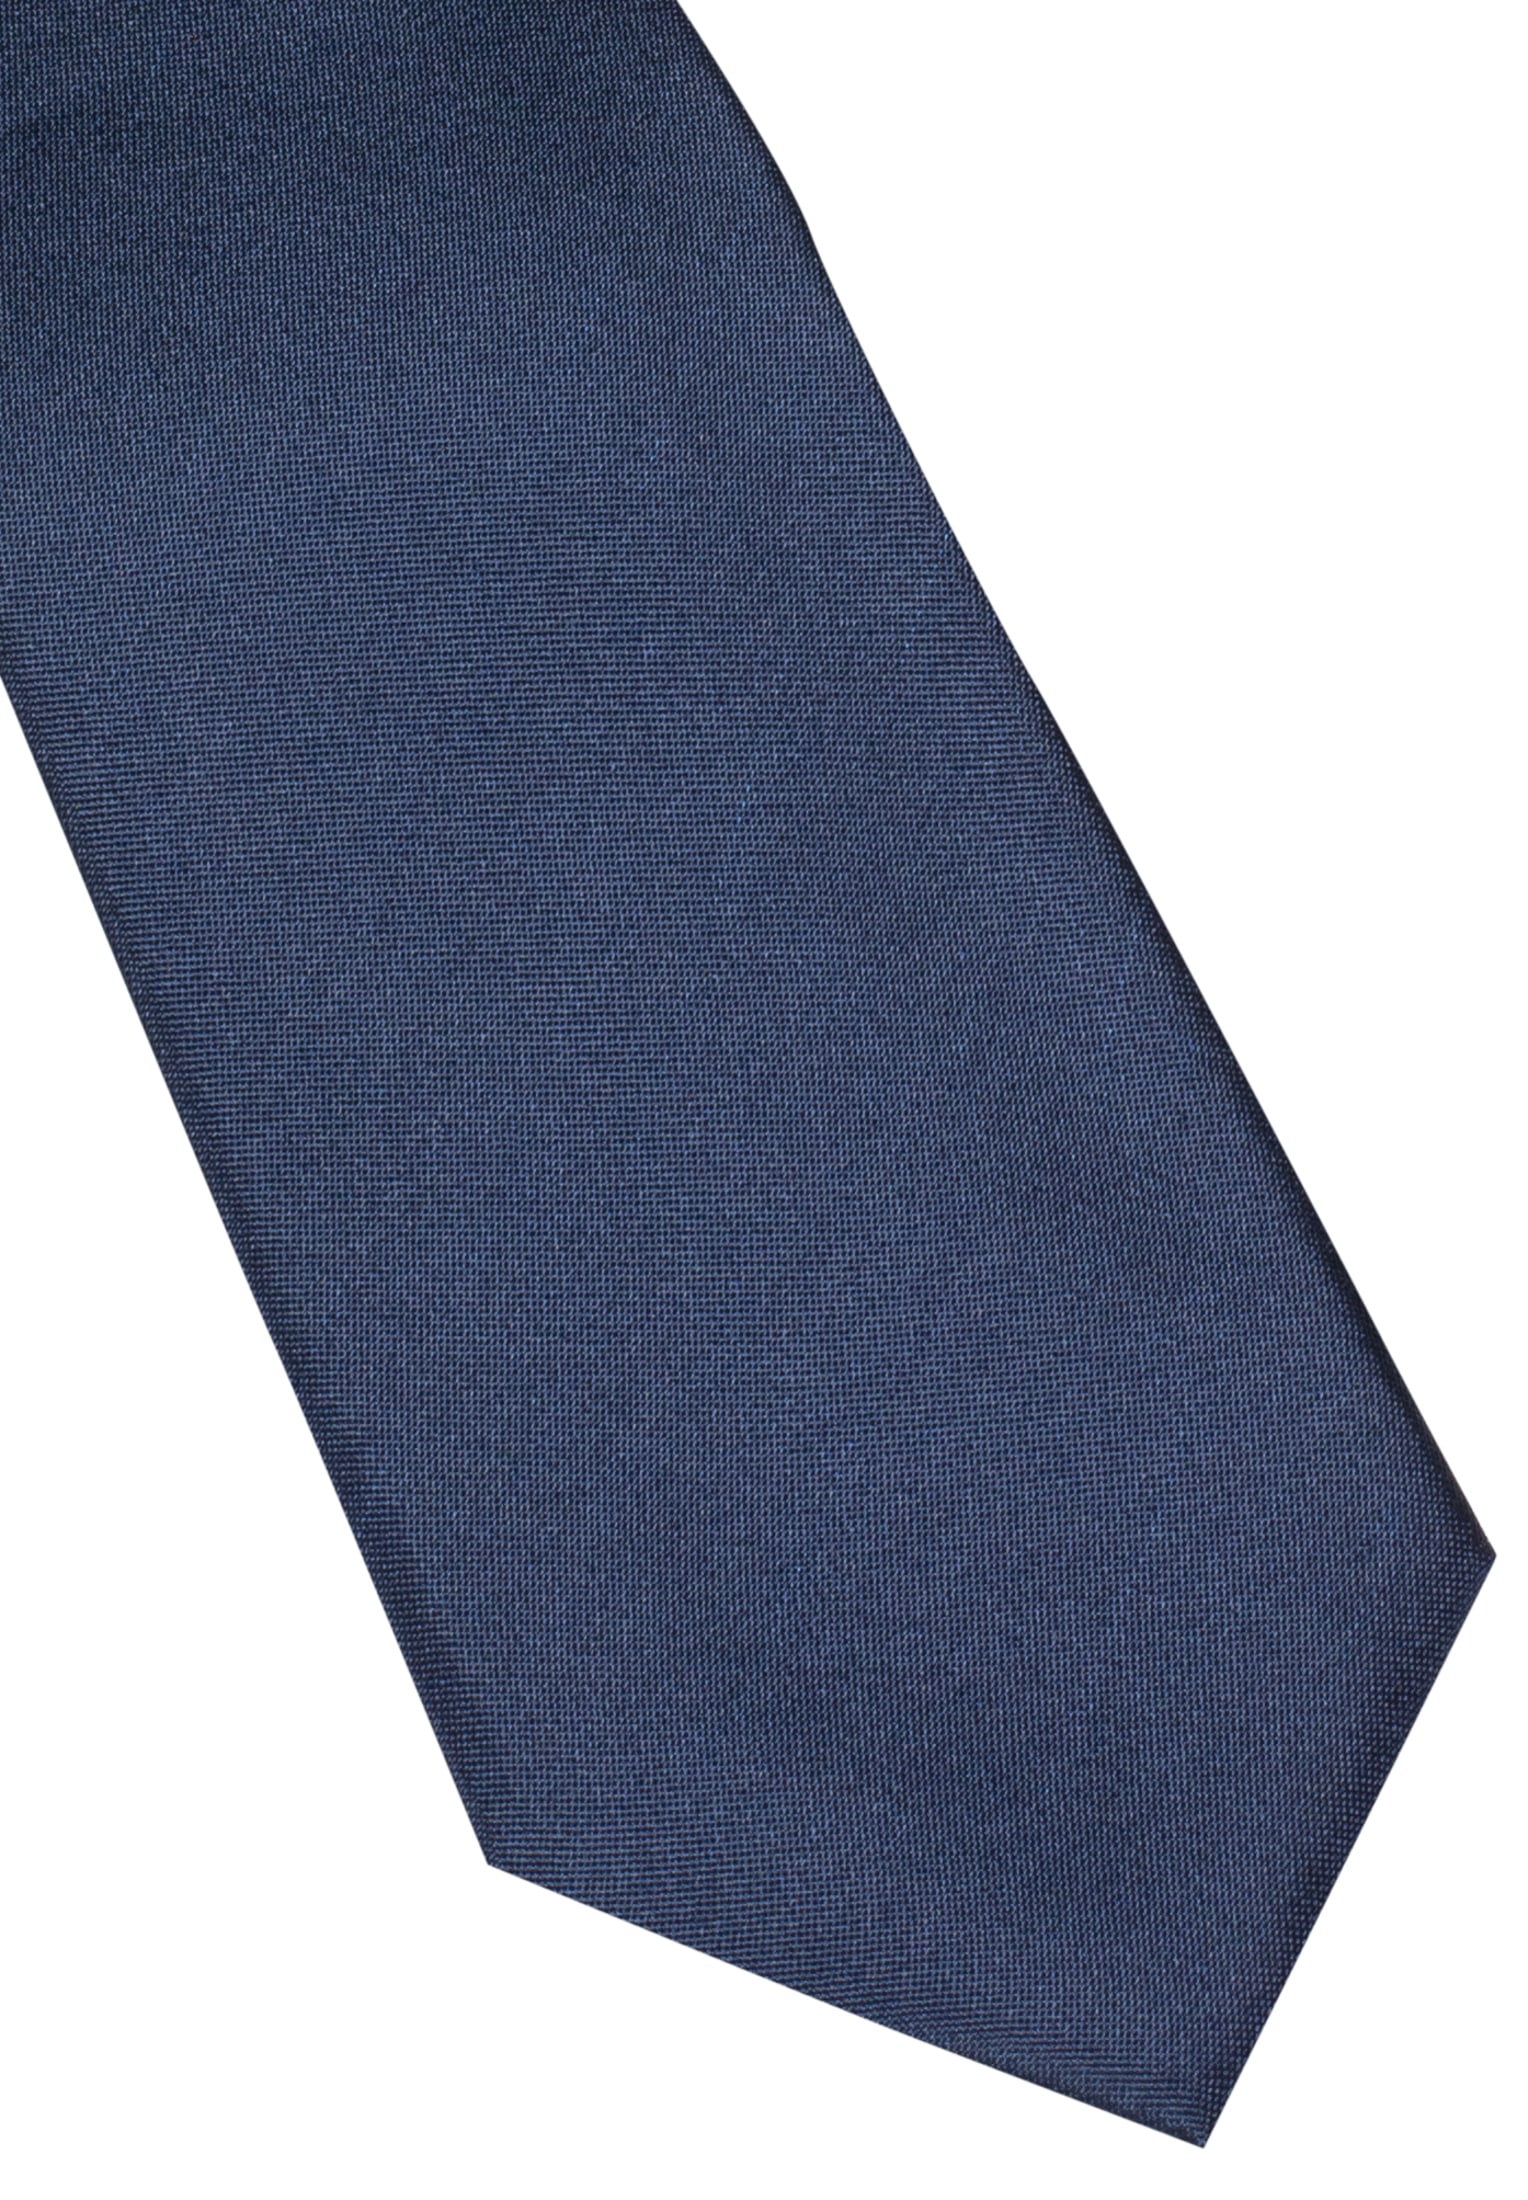 Krawatte in silber 1AC00025-03-11-142 silber | 142 | | unifarben